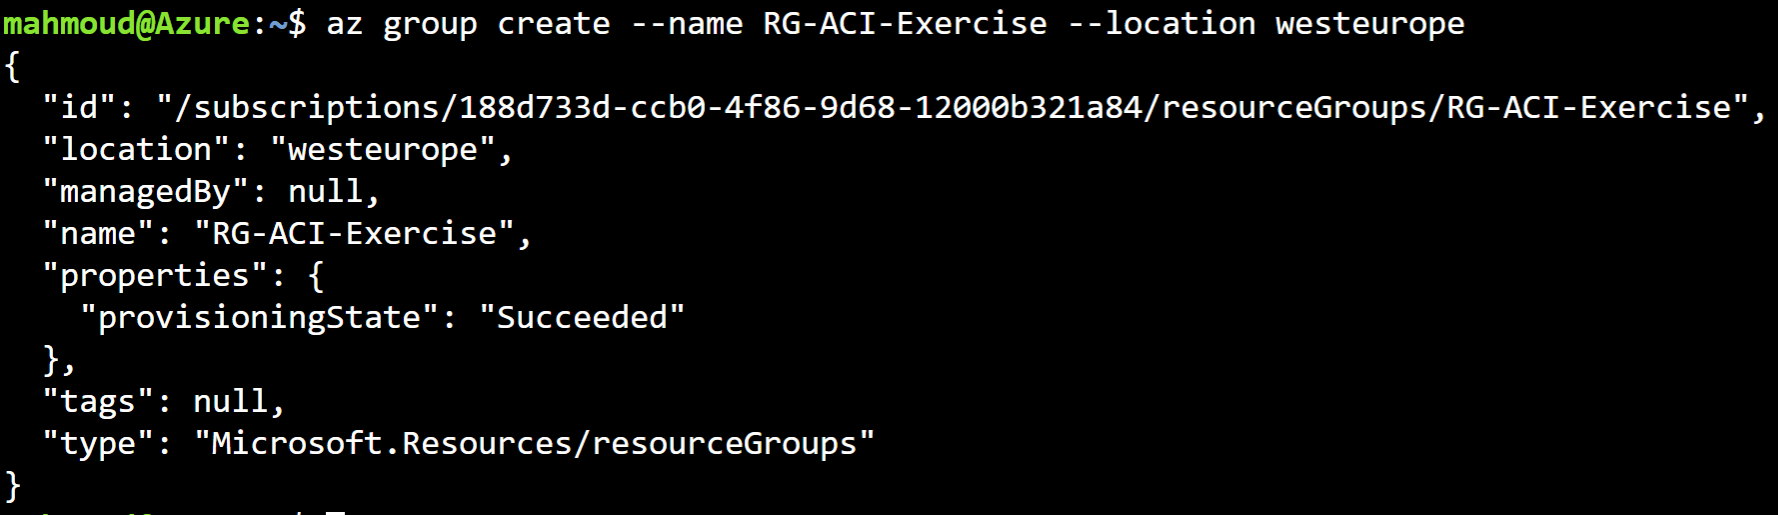 Practice - Azure Container Instances (ACI) Deployment using Azure CLI